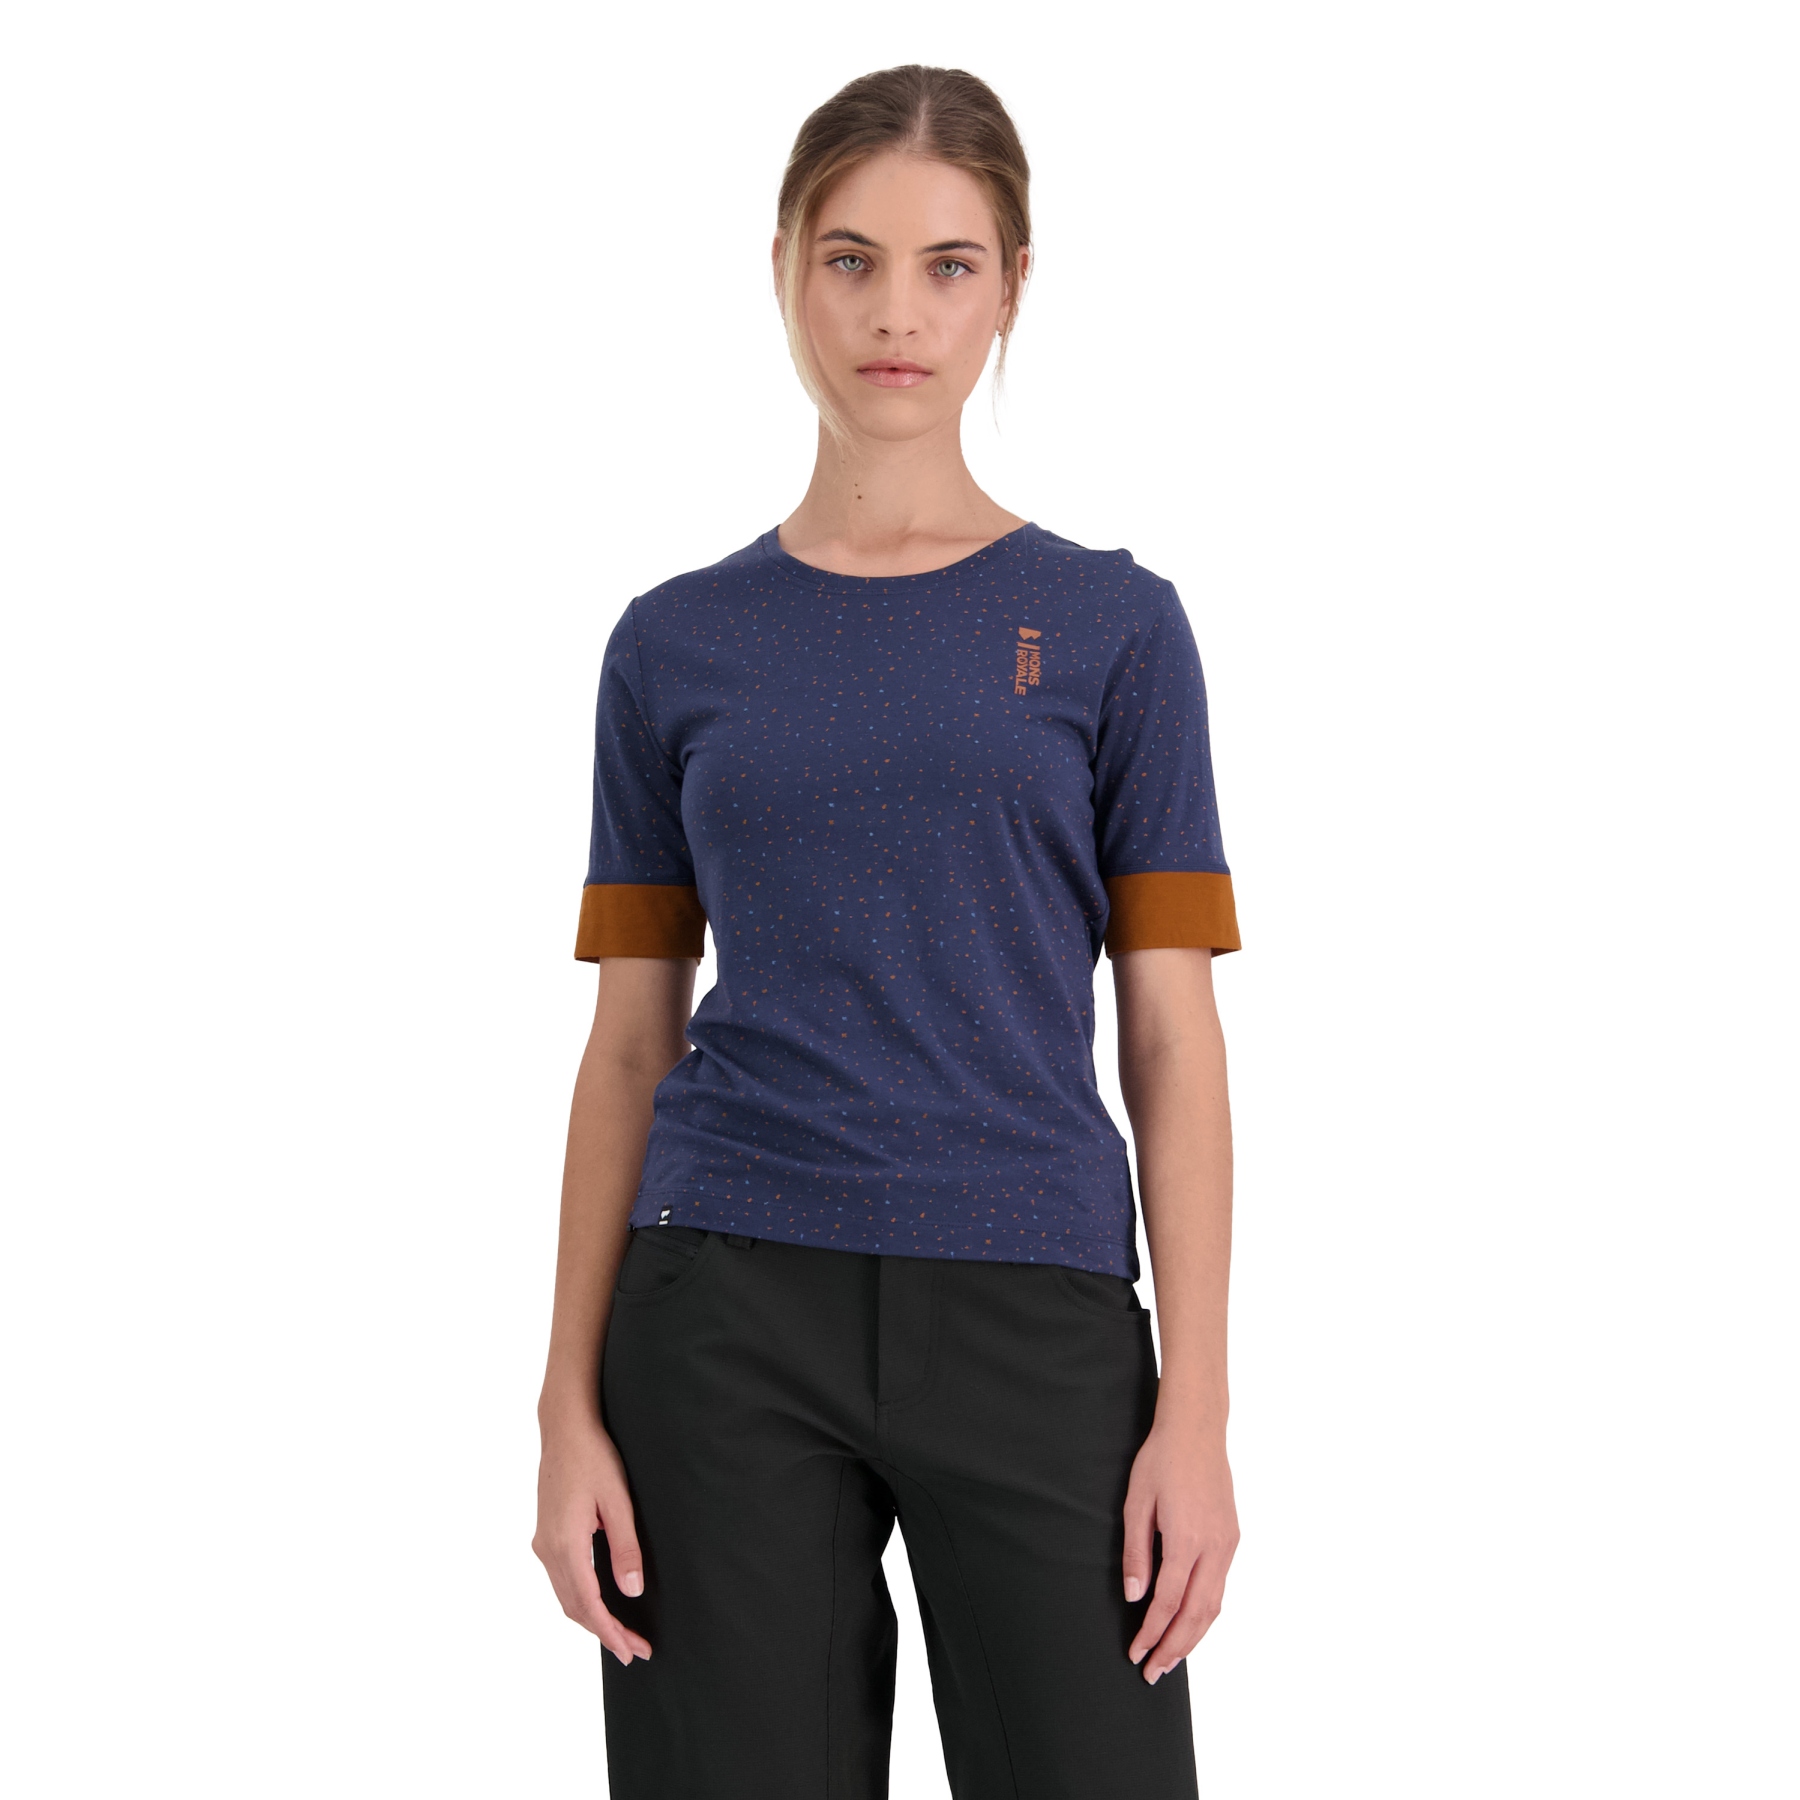 Productfoto van Mons Royale Cadence Merino Air-Con T-Shirt Dames - midnight terrazzo